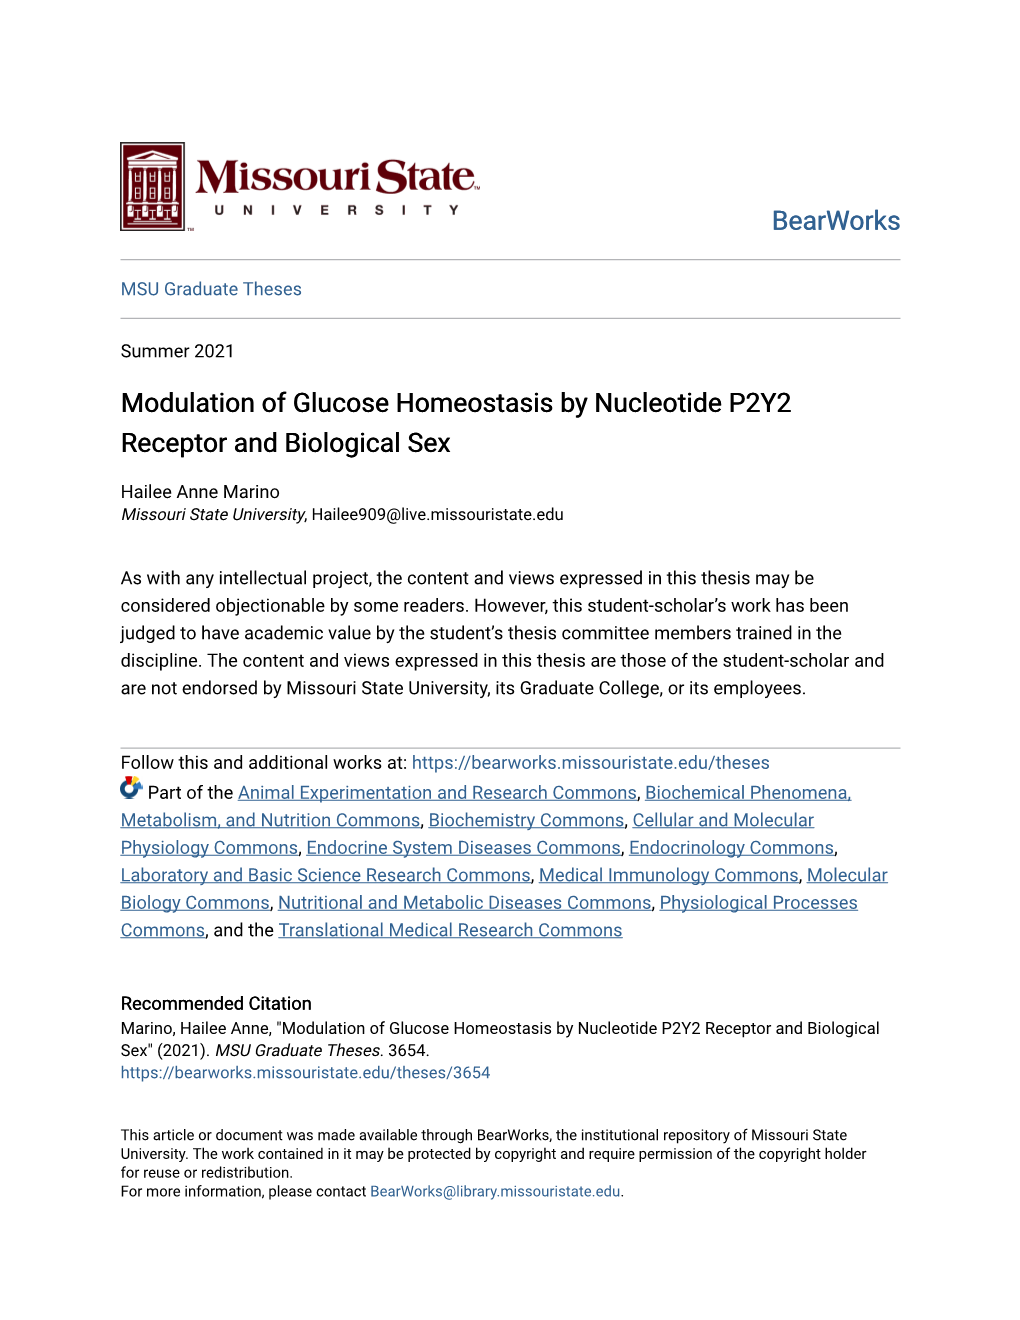 Modulation of Glucose Homeostasis by Nucleotide P2Y2 Receptor and Biological Sex